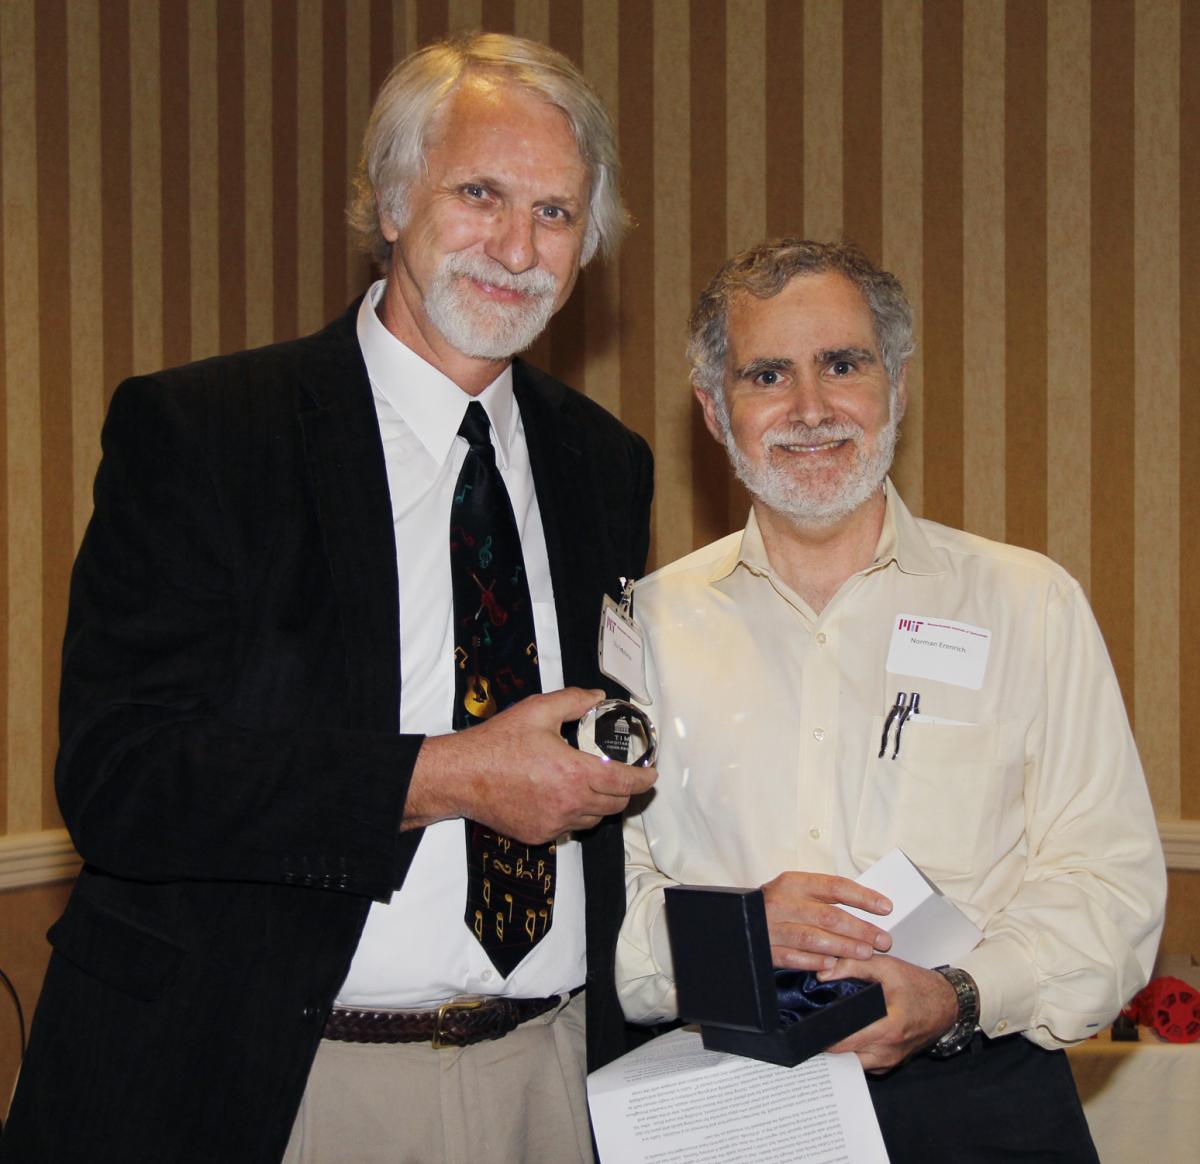 Stuart Greydanus (left) receiving his award from Norman Erenrich '72.